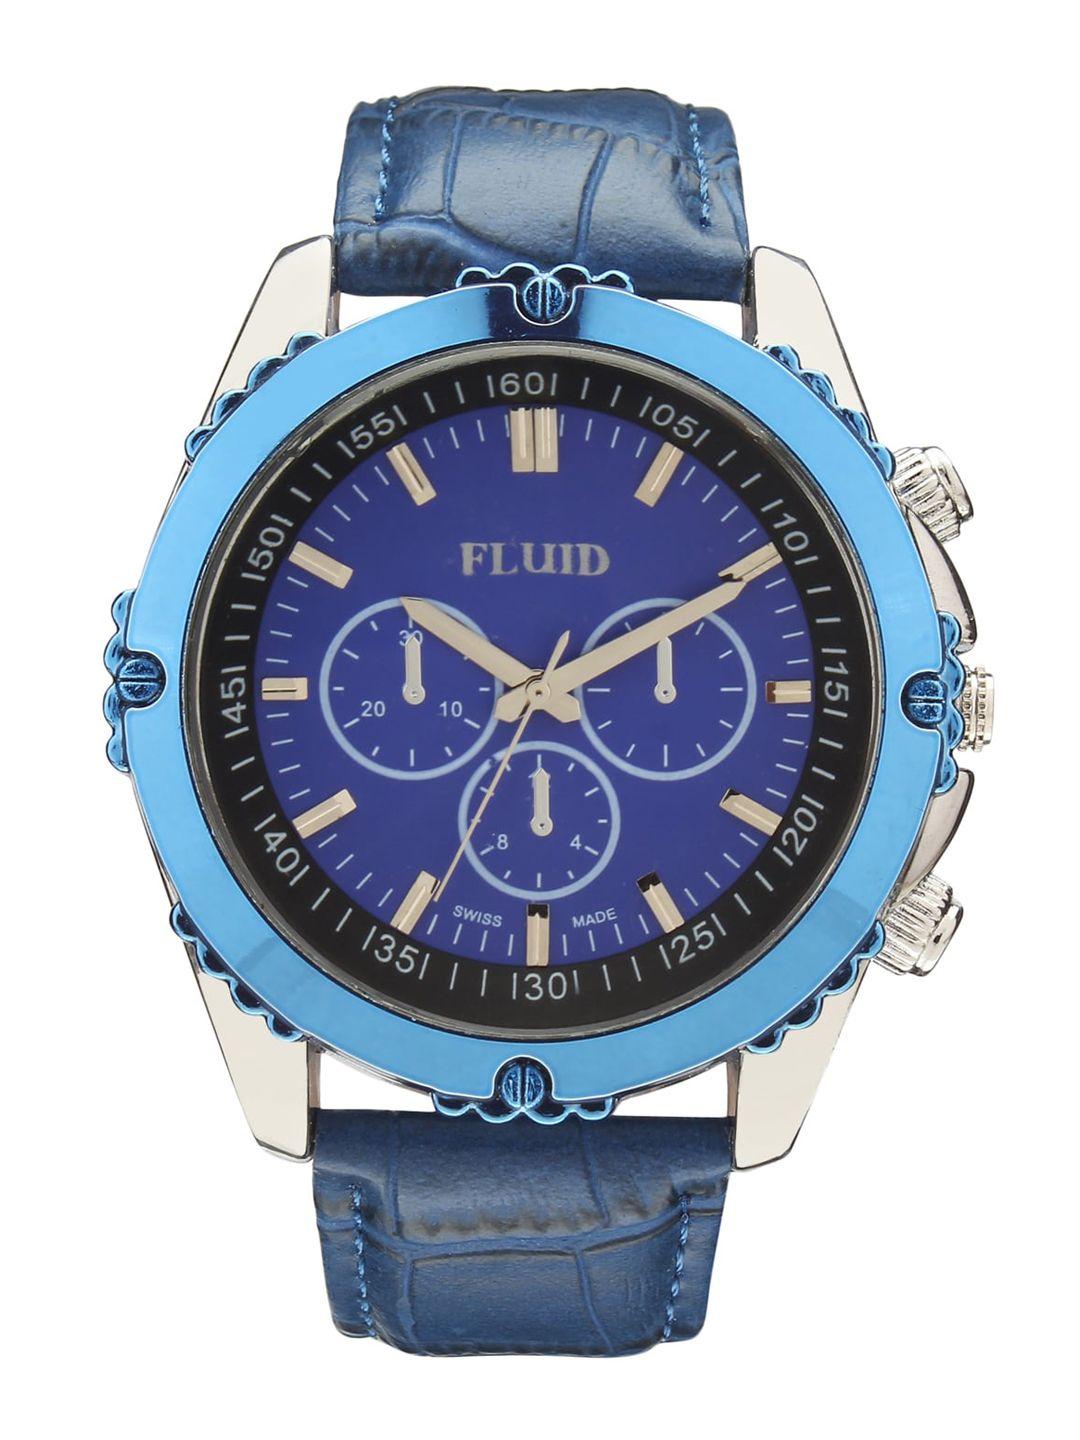 fluid men leather straps analogue watch fl23-909-bl01